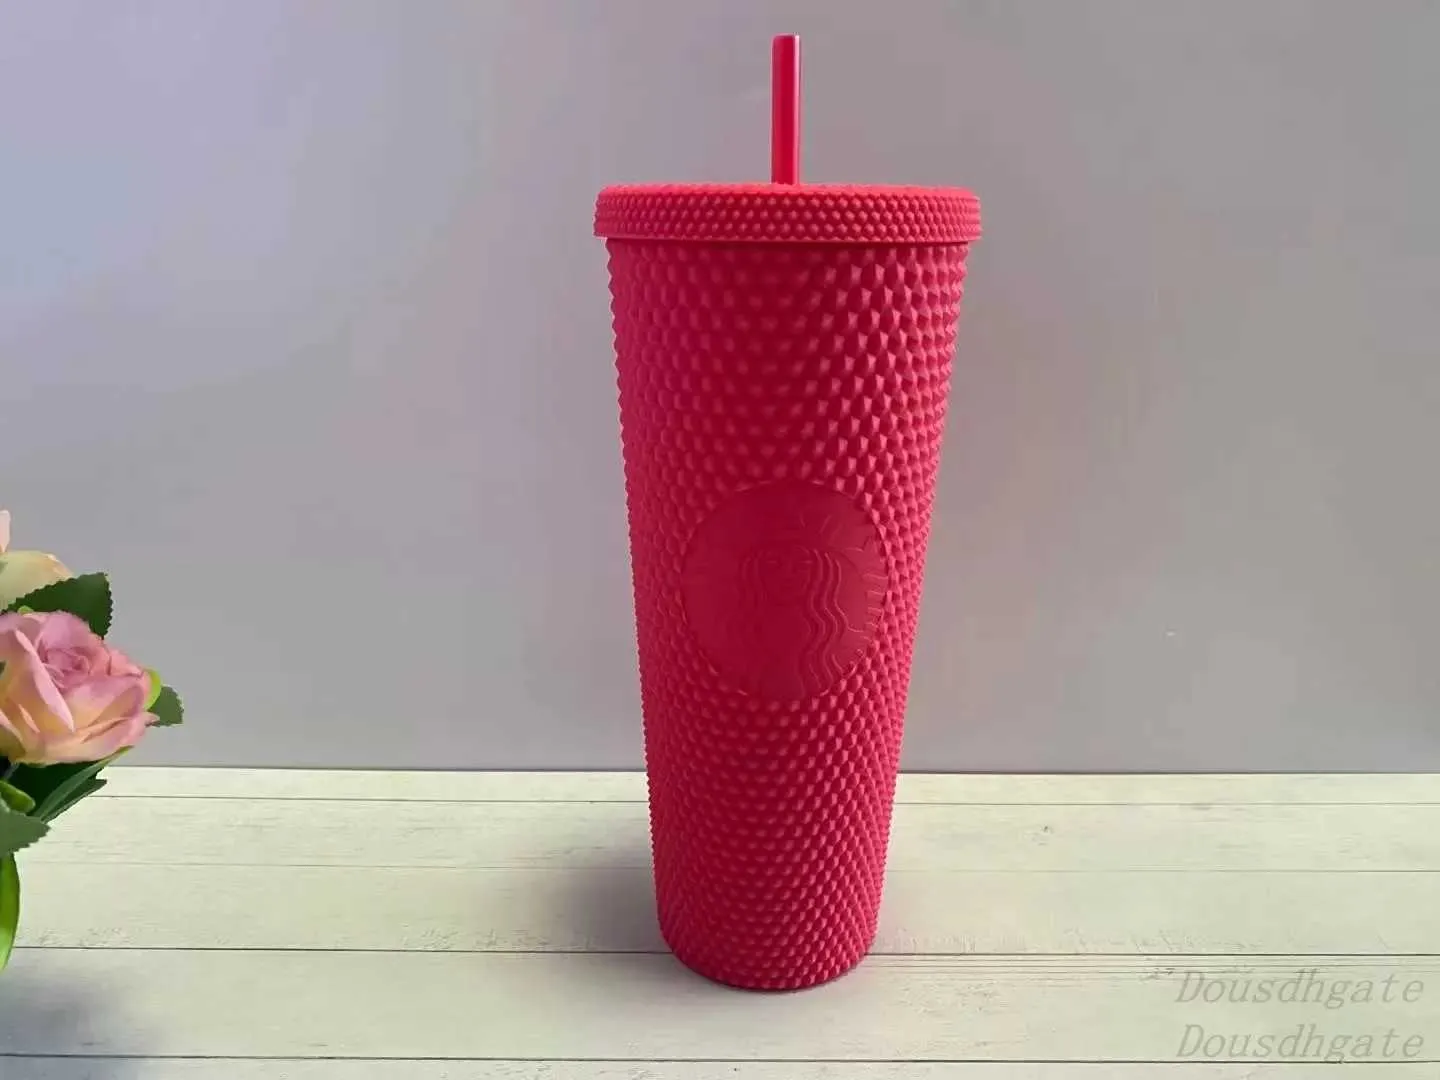 Starbucks Zeemeermin Godin Bezaaid Cup Tumblers 710ml CARBIE Roze Matzwarte Plastic Mokken met Rietje308N